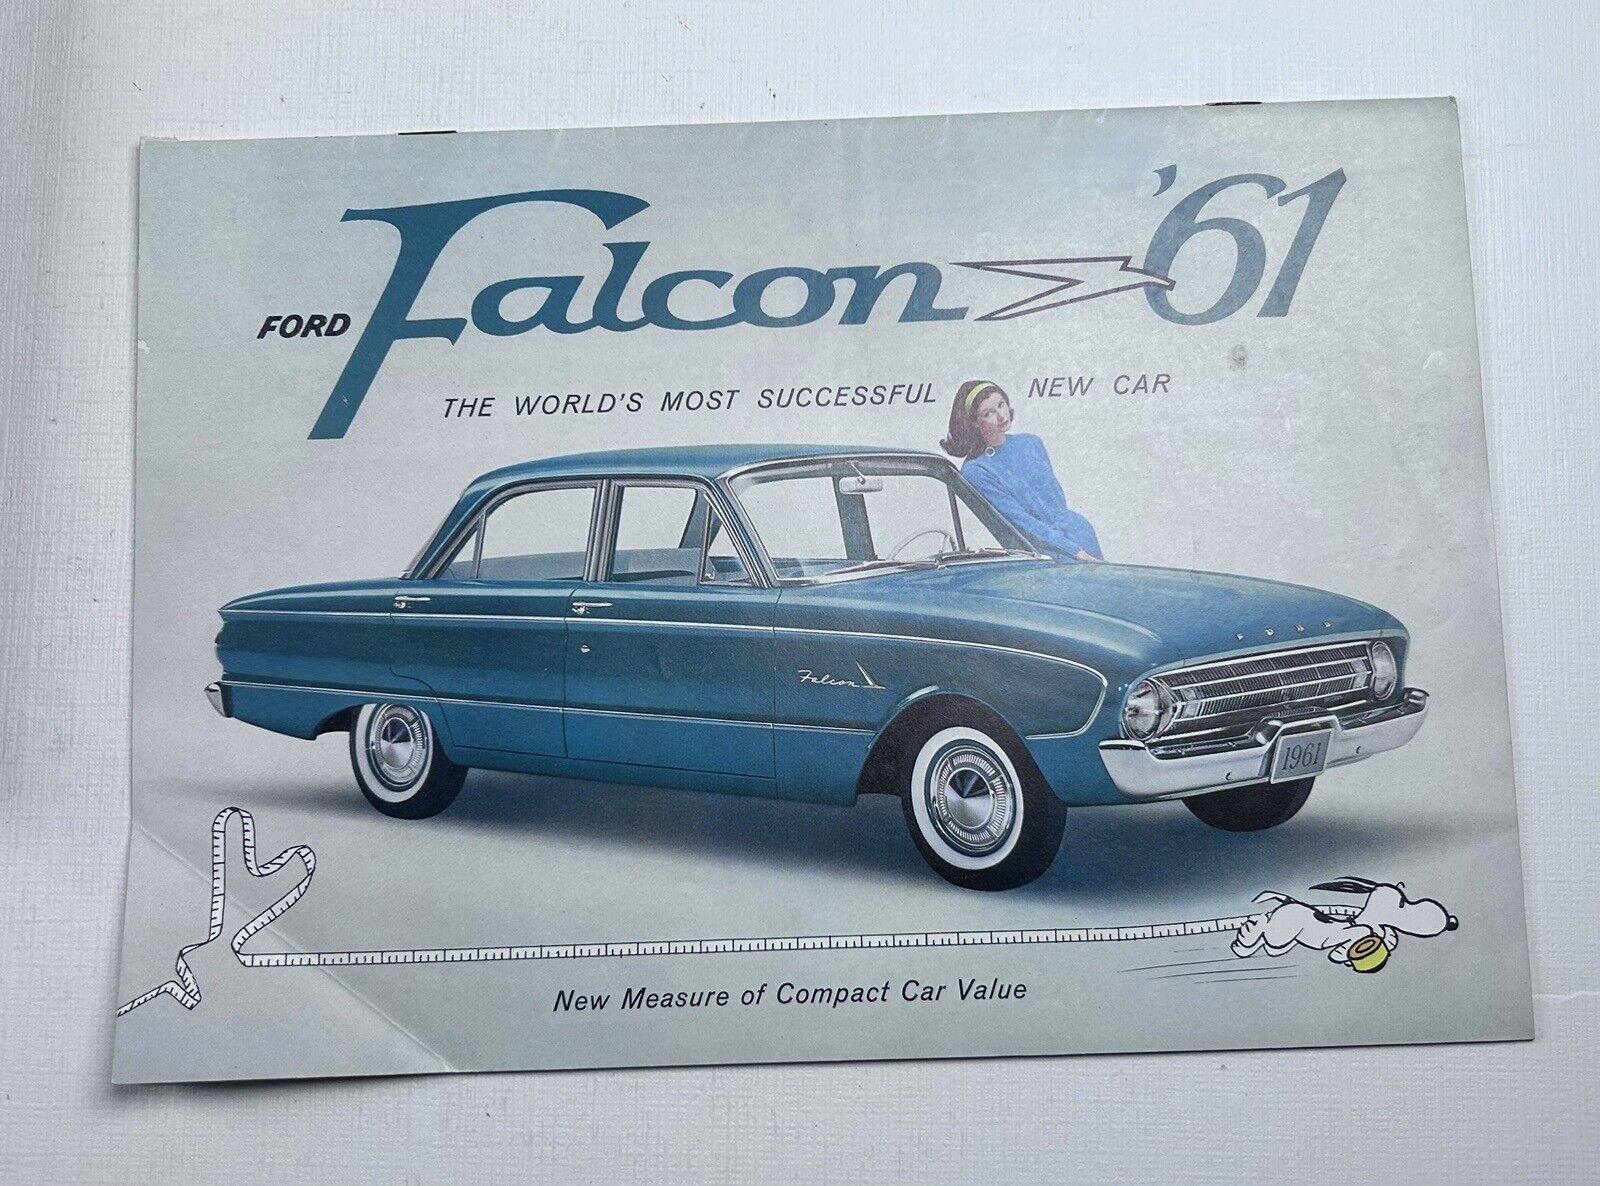 Ford Falcon 1961 Car Brochure Snoopy Peanuts Cartoons 